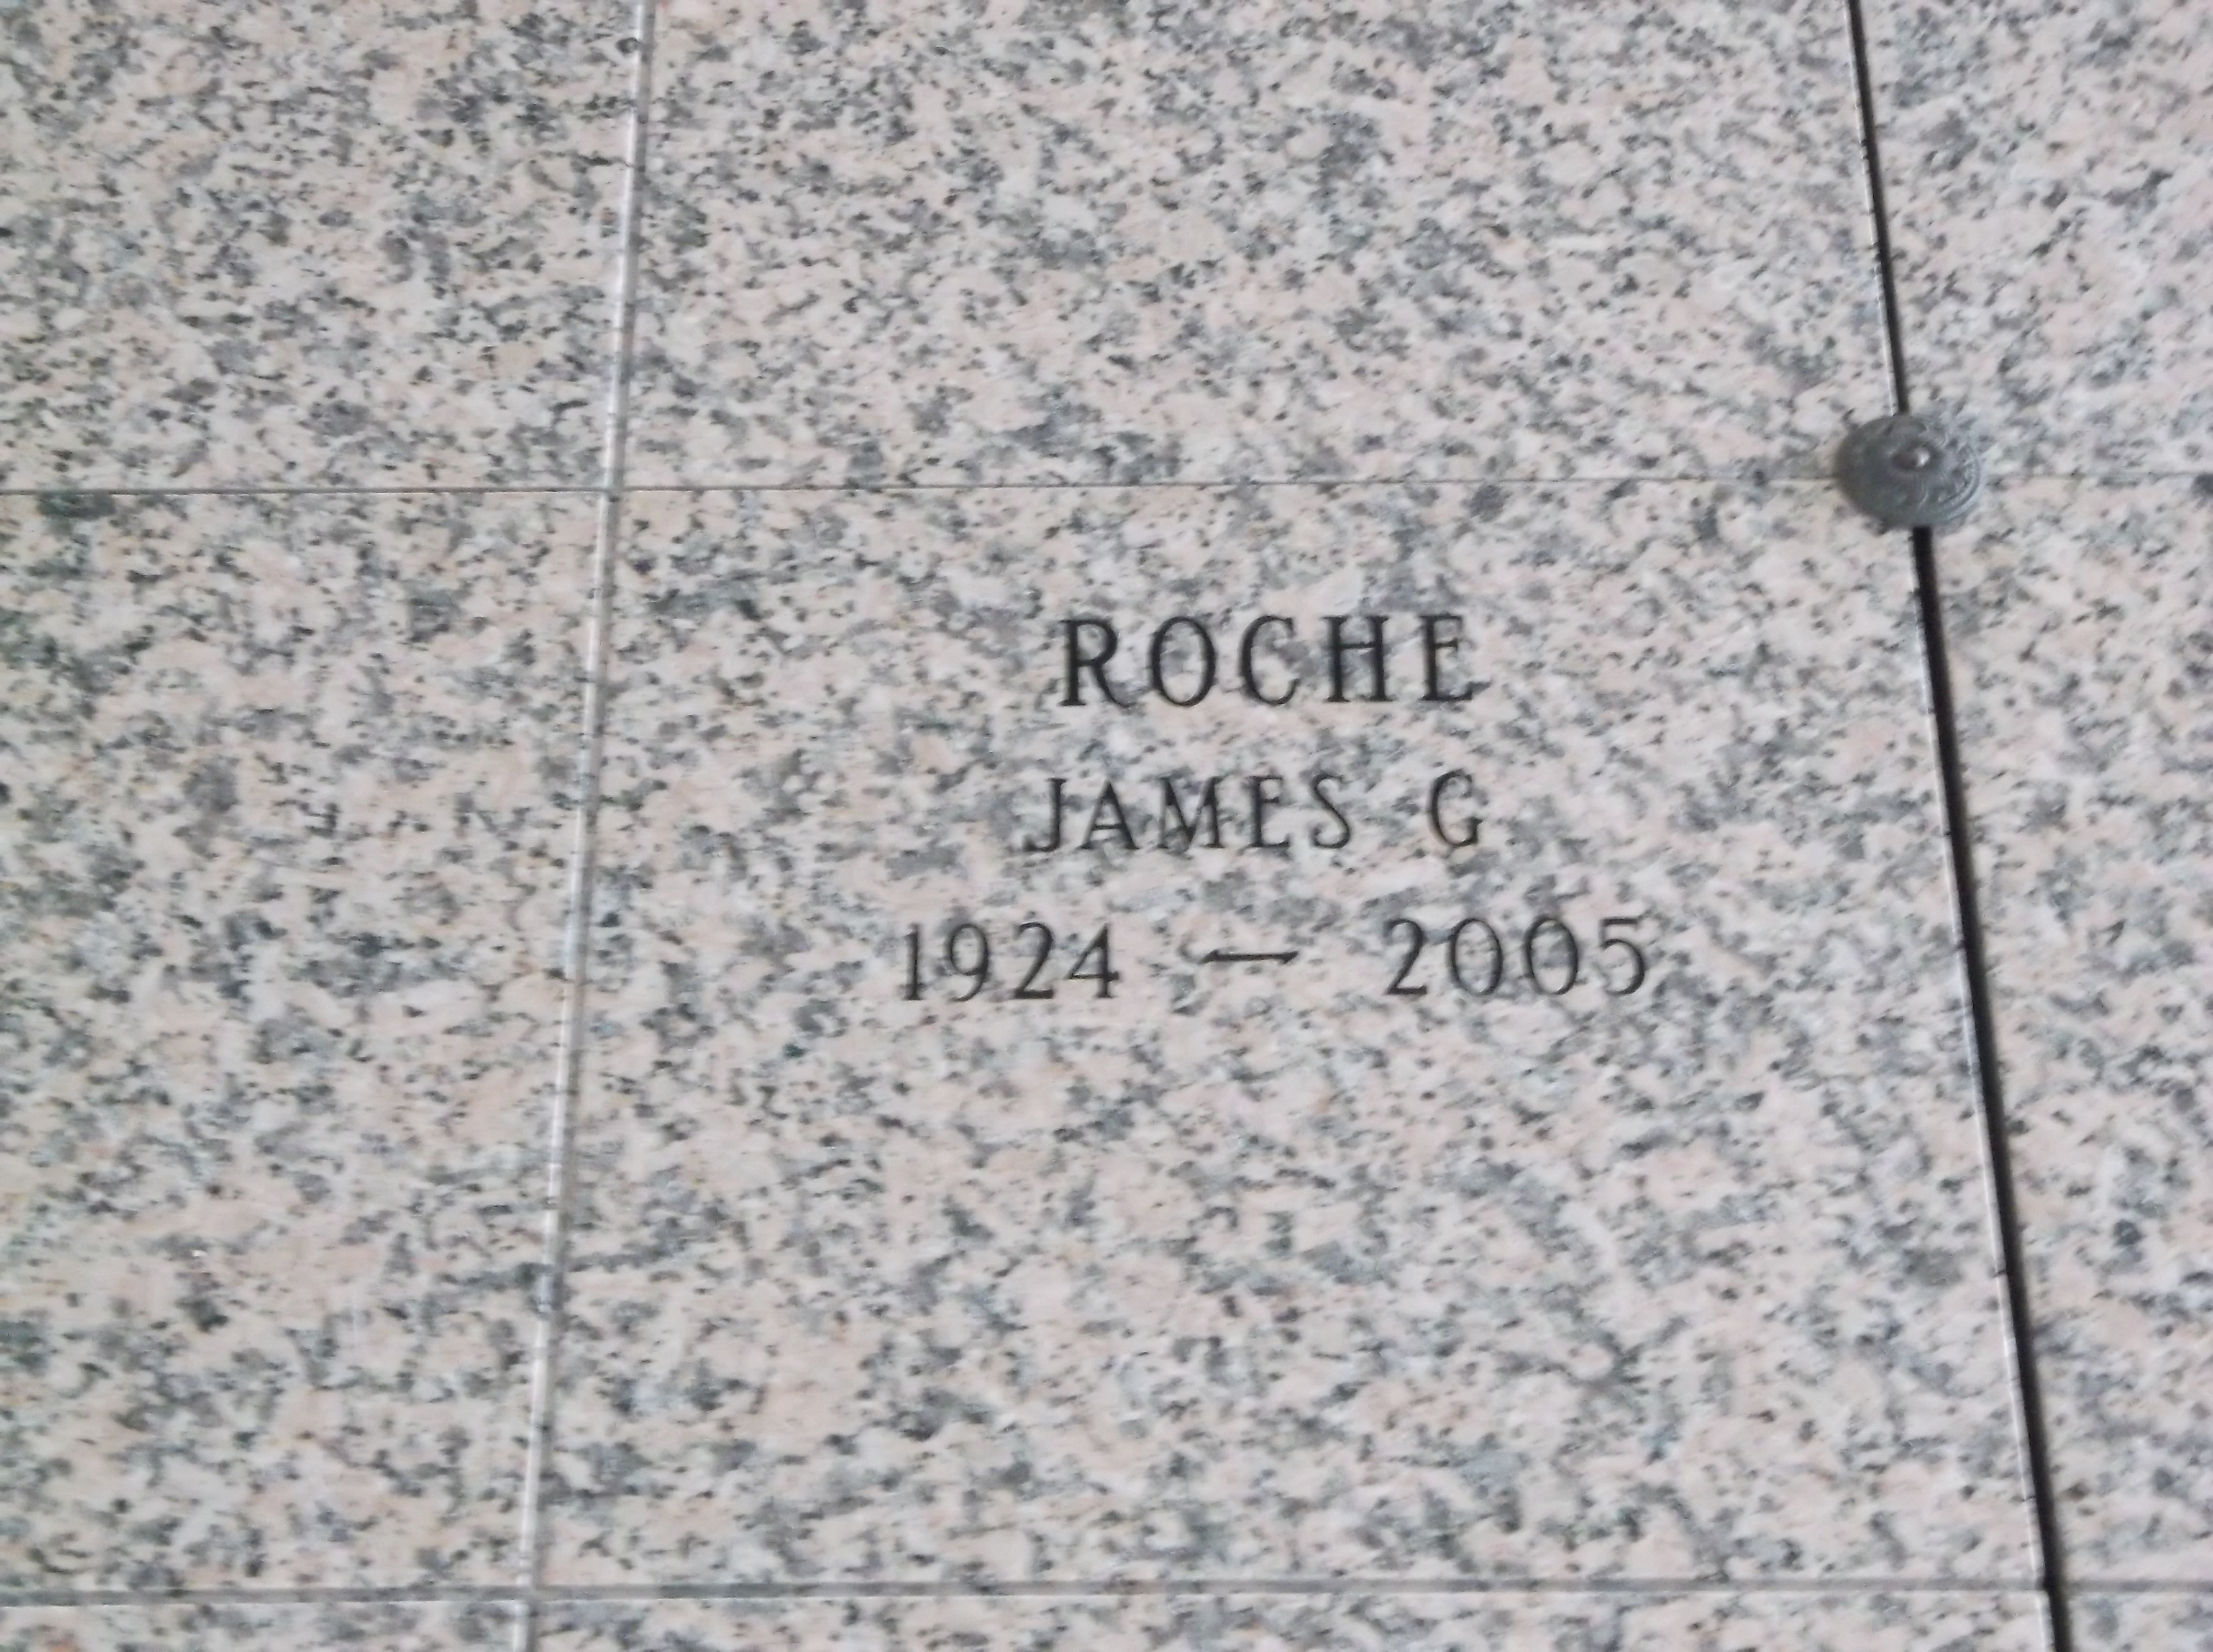 James G Roche